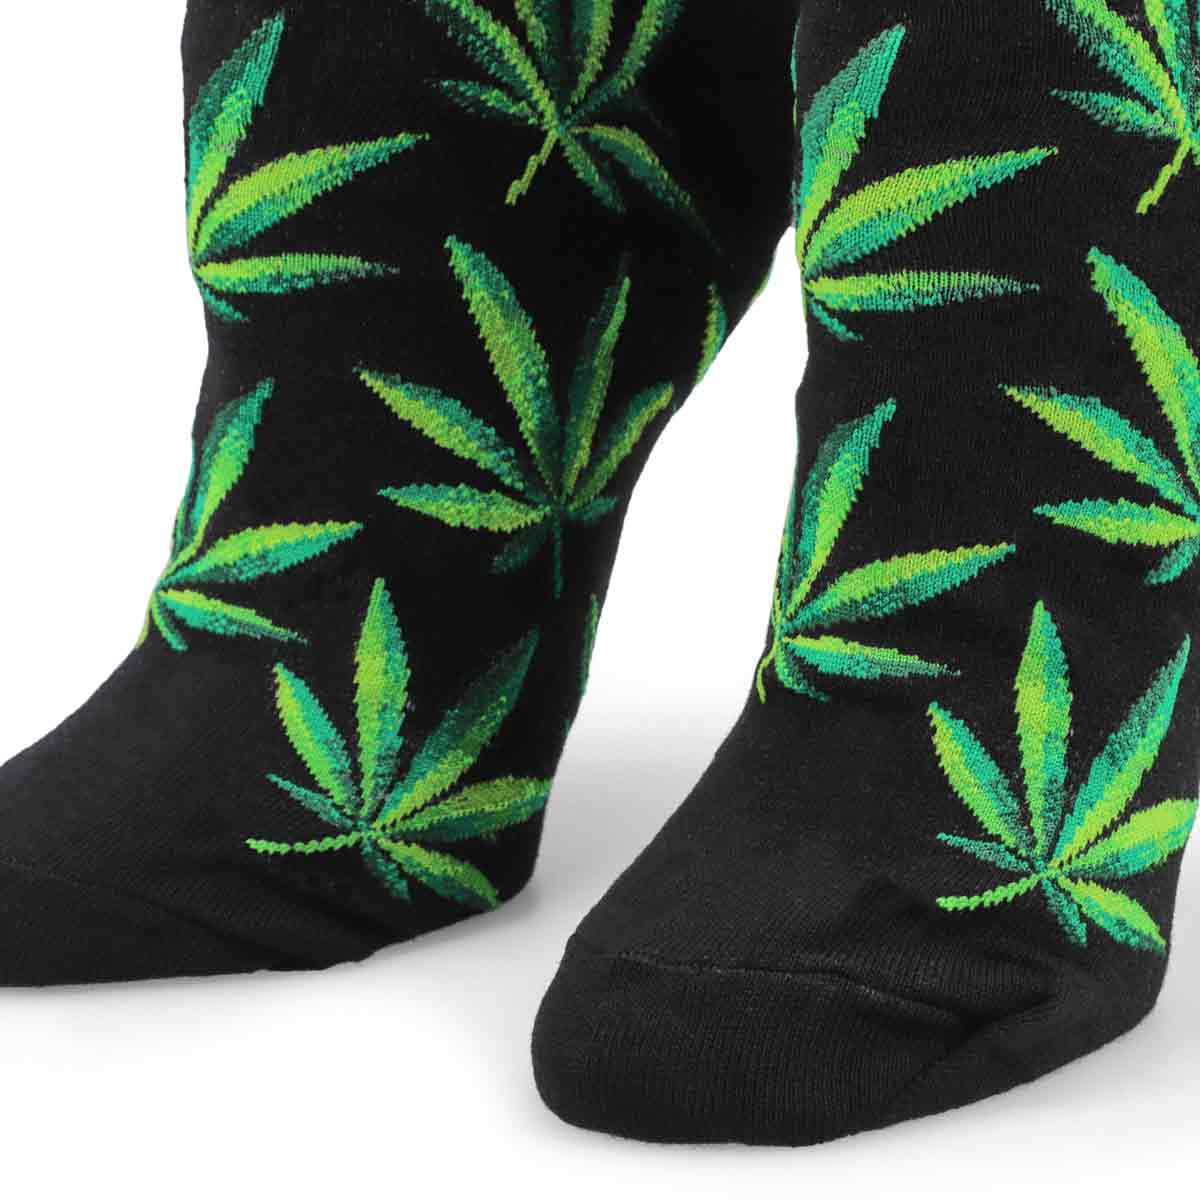 Women's Hemp Leaf black printed socks